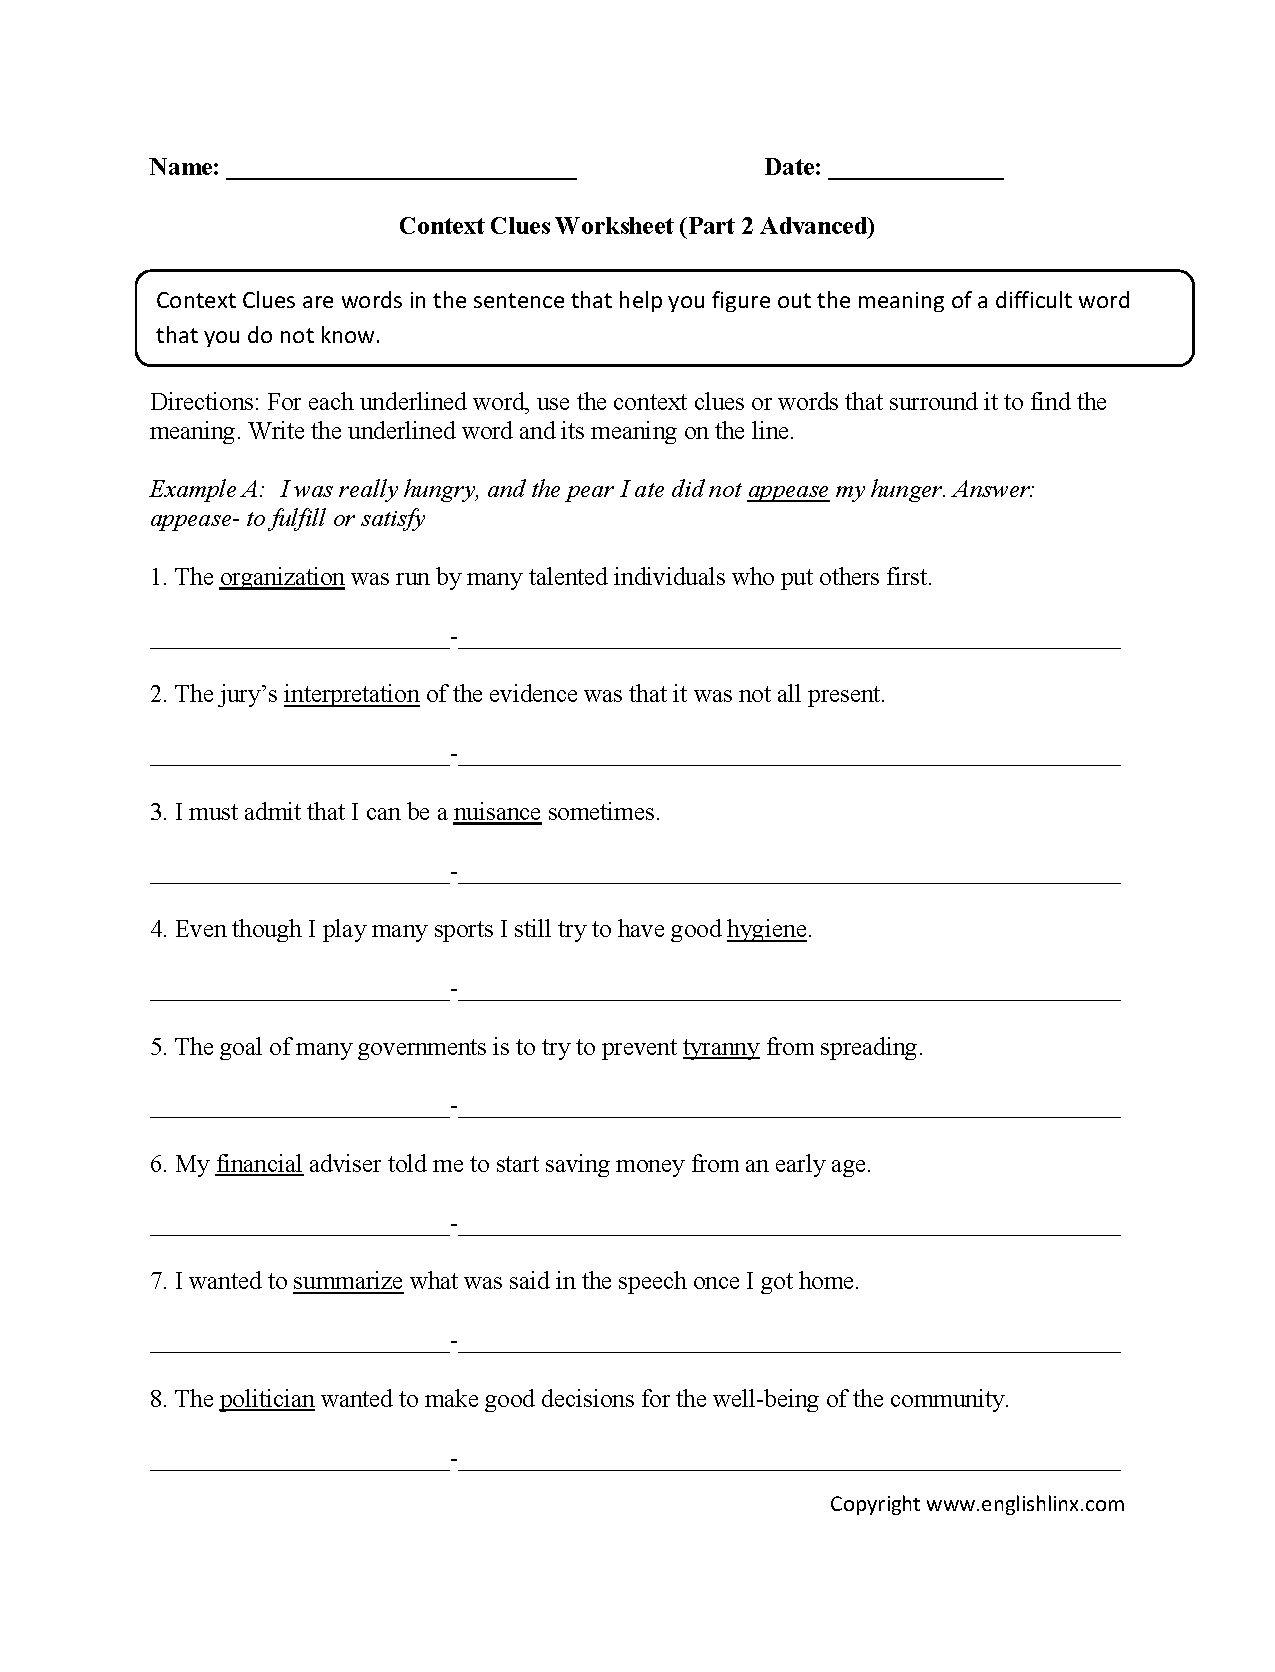 Context Clues Worksheets Advanced Part 2